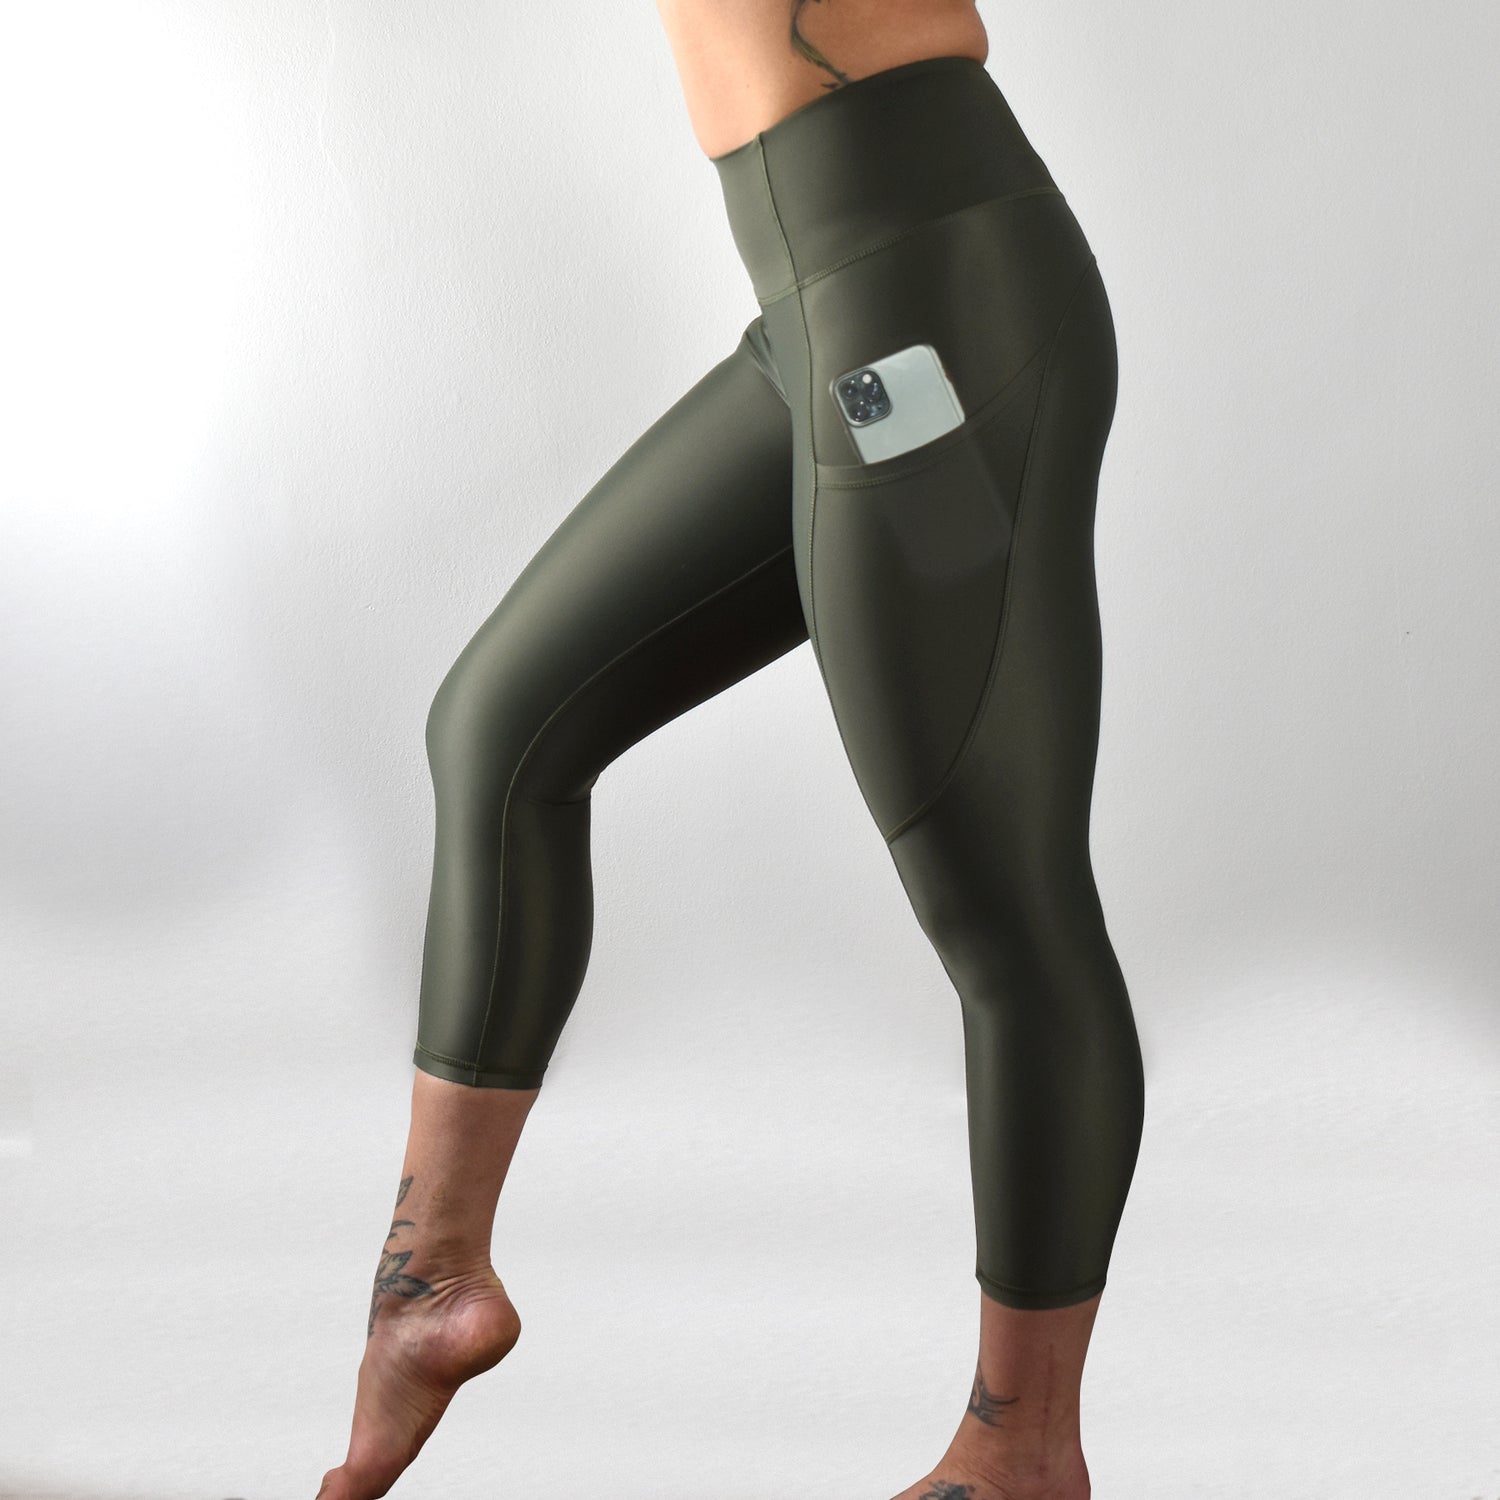 Gymwrap High-Rise Cropped Legging with Side Pockets